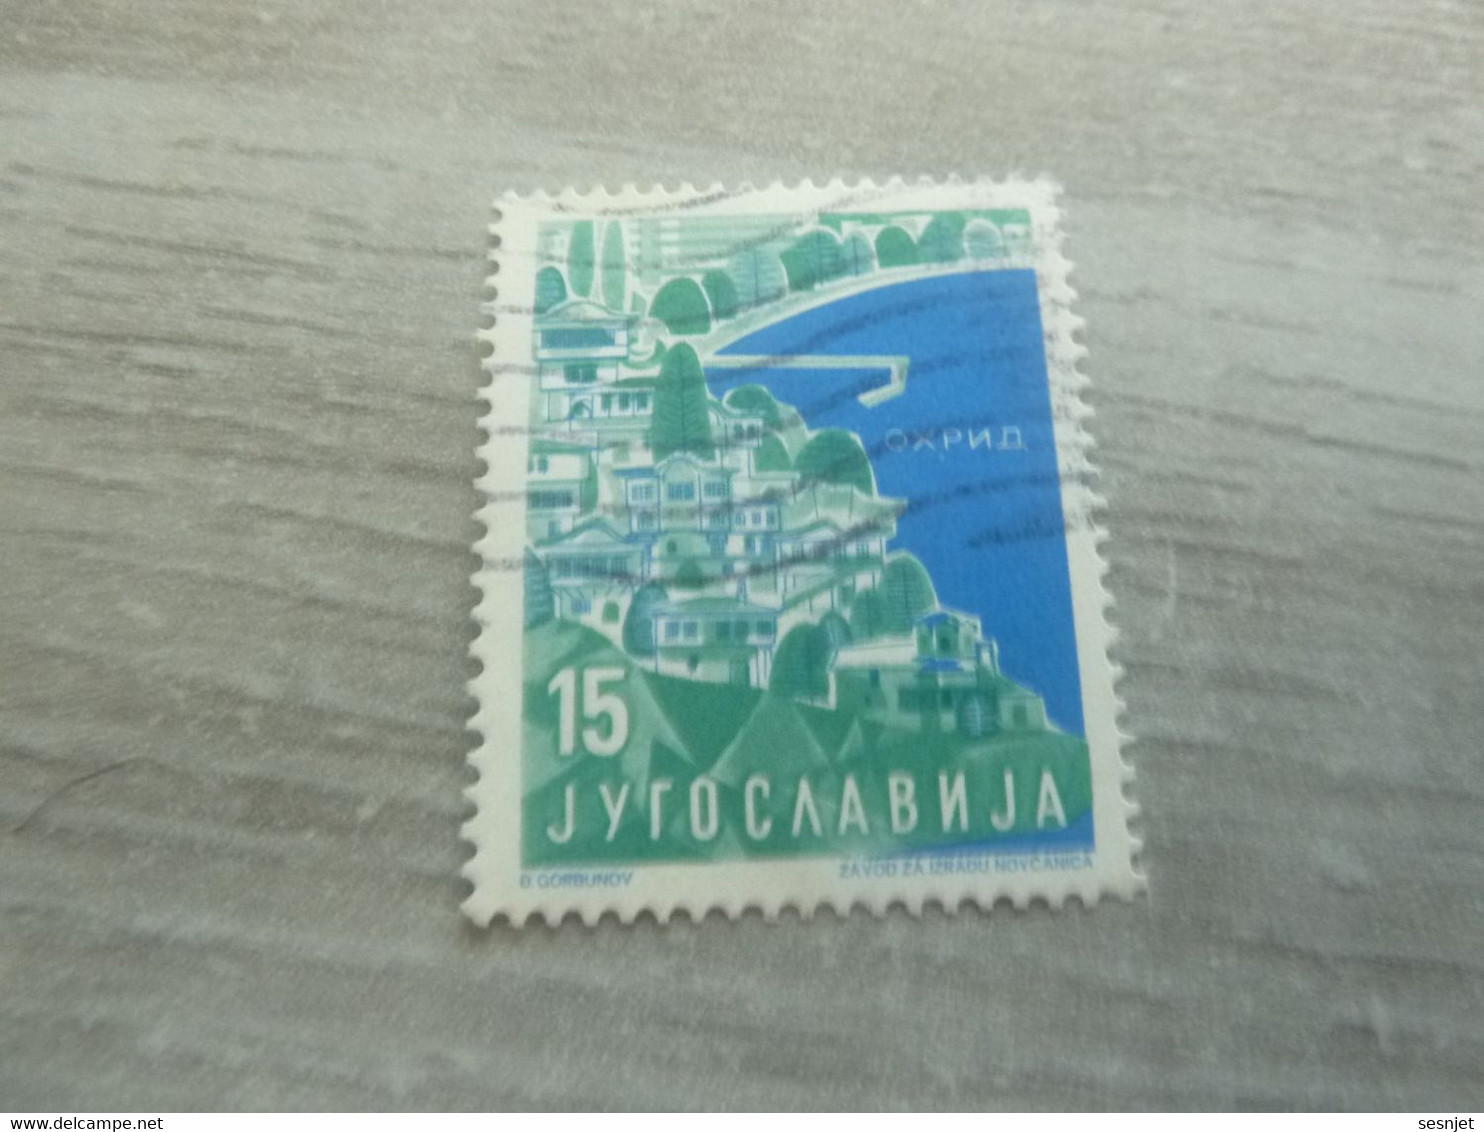 Jyrocaabnja - Oxpno - Corbunov - Val 15 - Gris, Bleu Et Vert - Oblitéré - - Usati